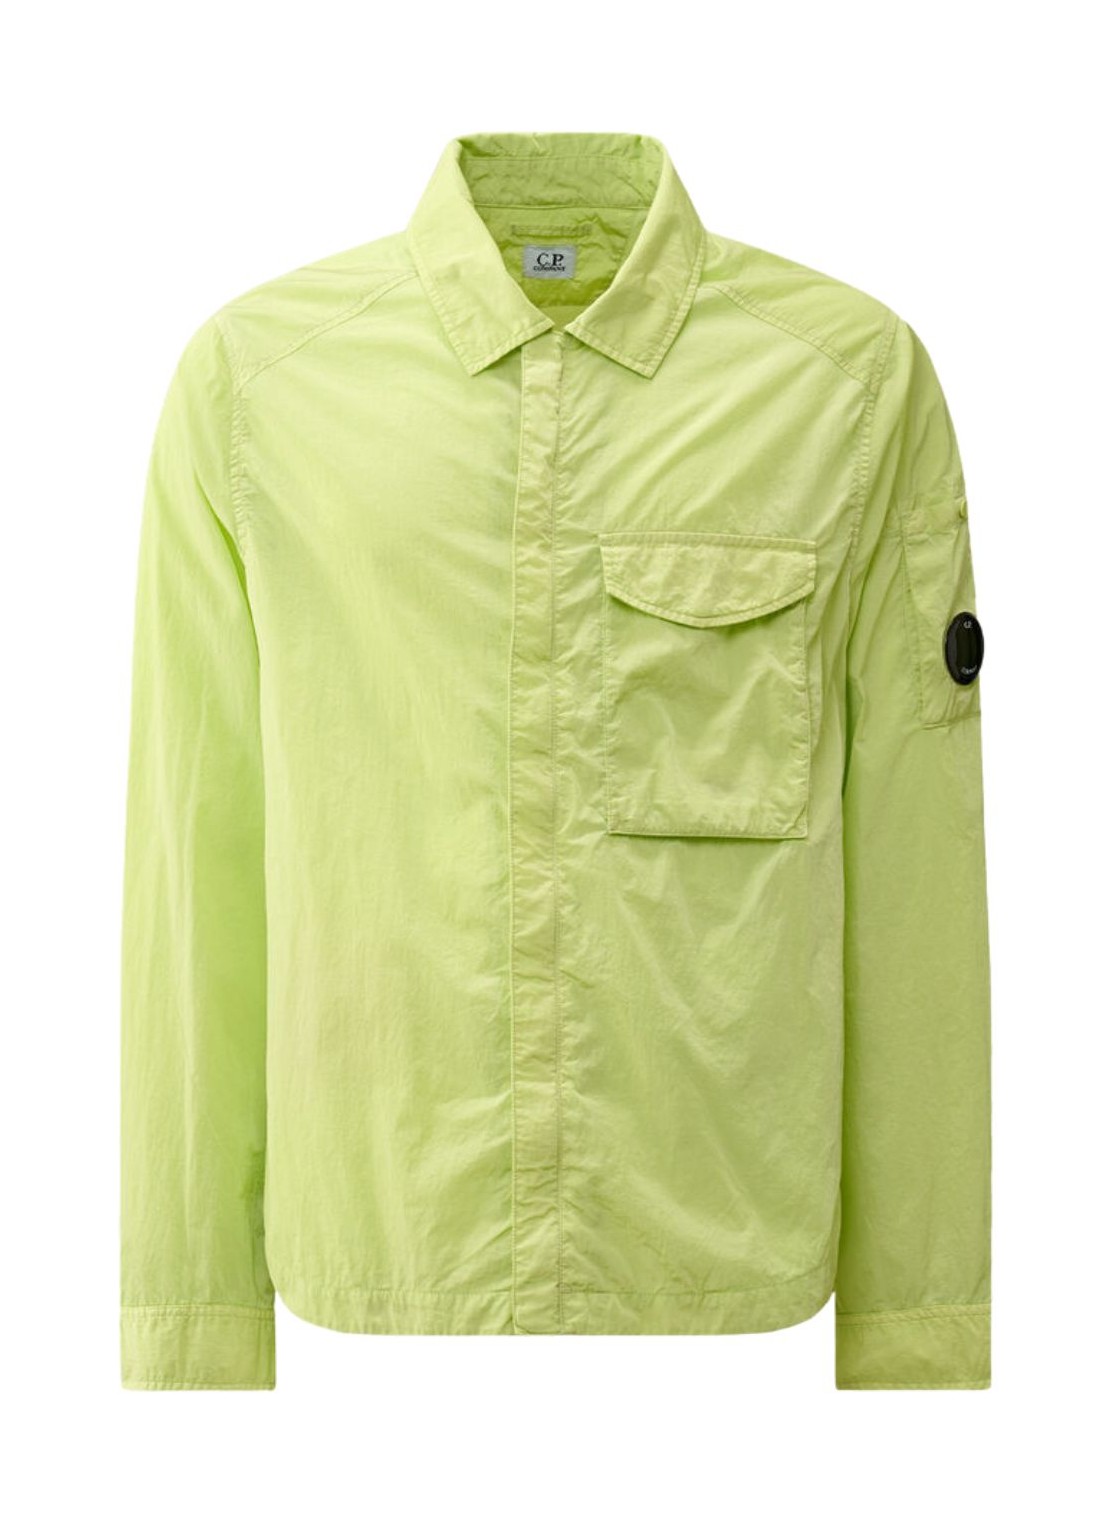 Outerwear c.p.company outerwear man chrome-r pocket overshirt 16cmos039a005904g 613 talla verde
 